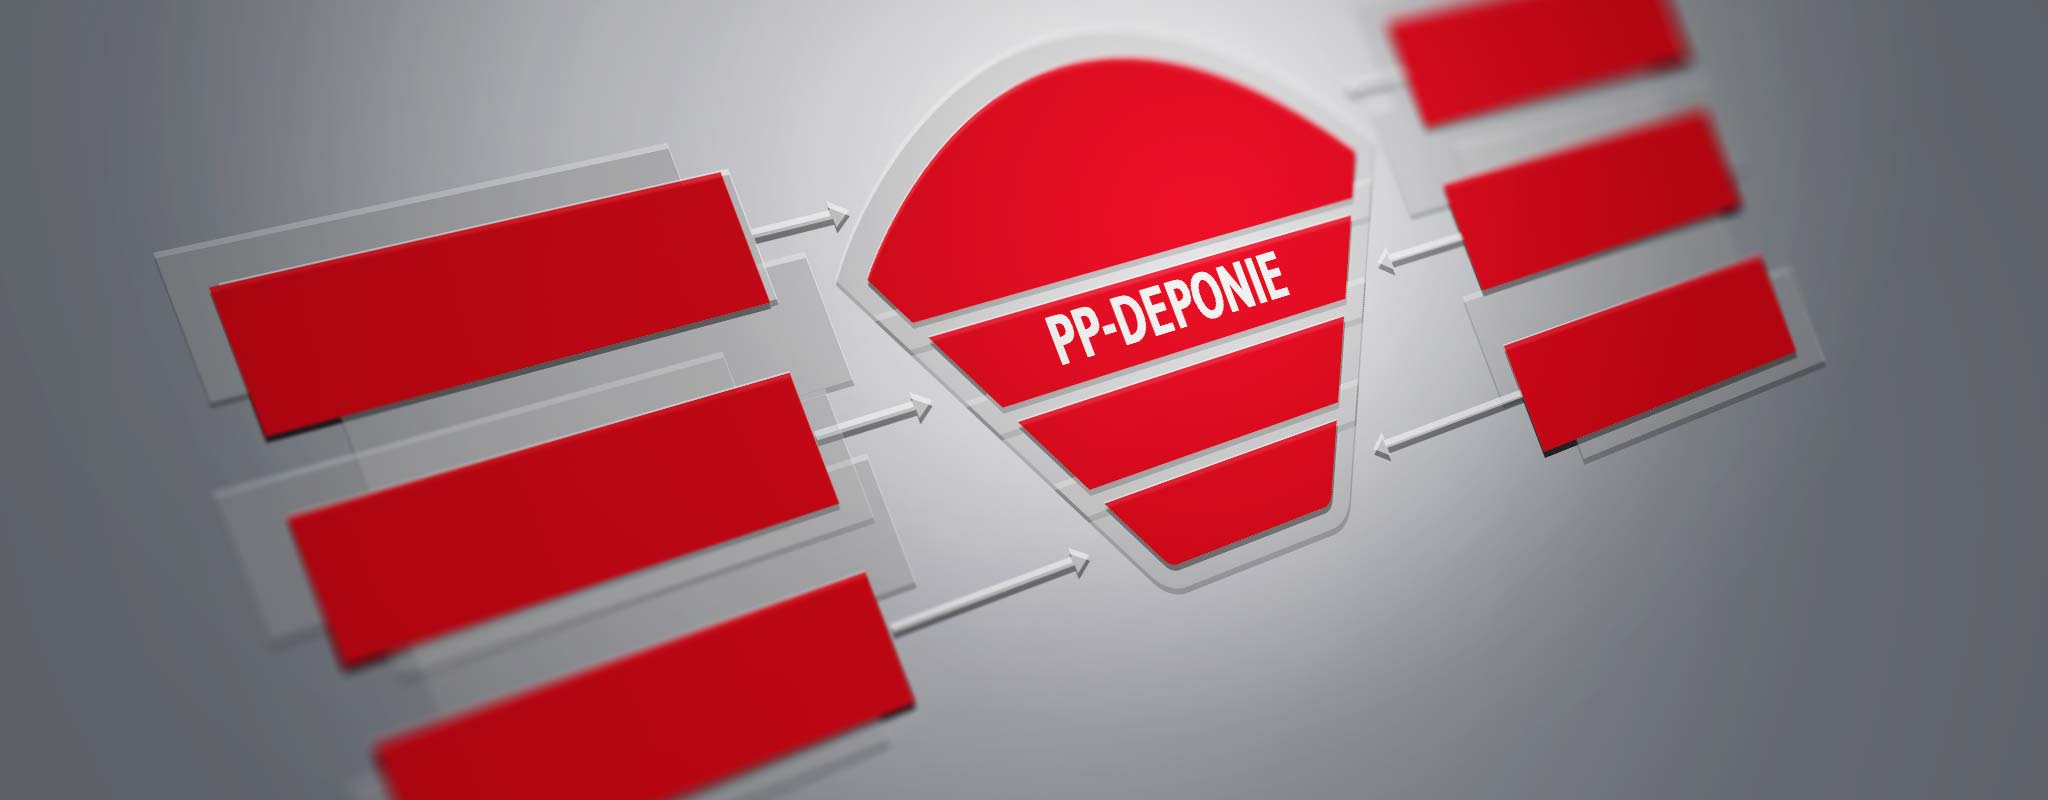 Alternativer Name für pp.deponie®: PrePaid Deponie